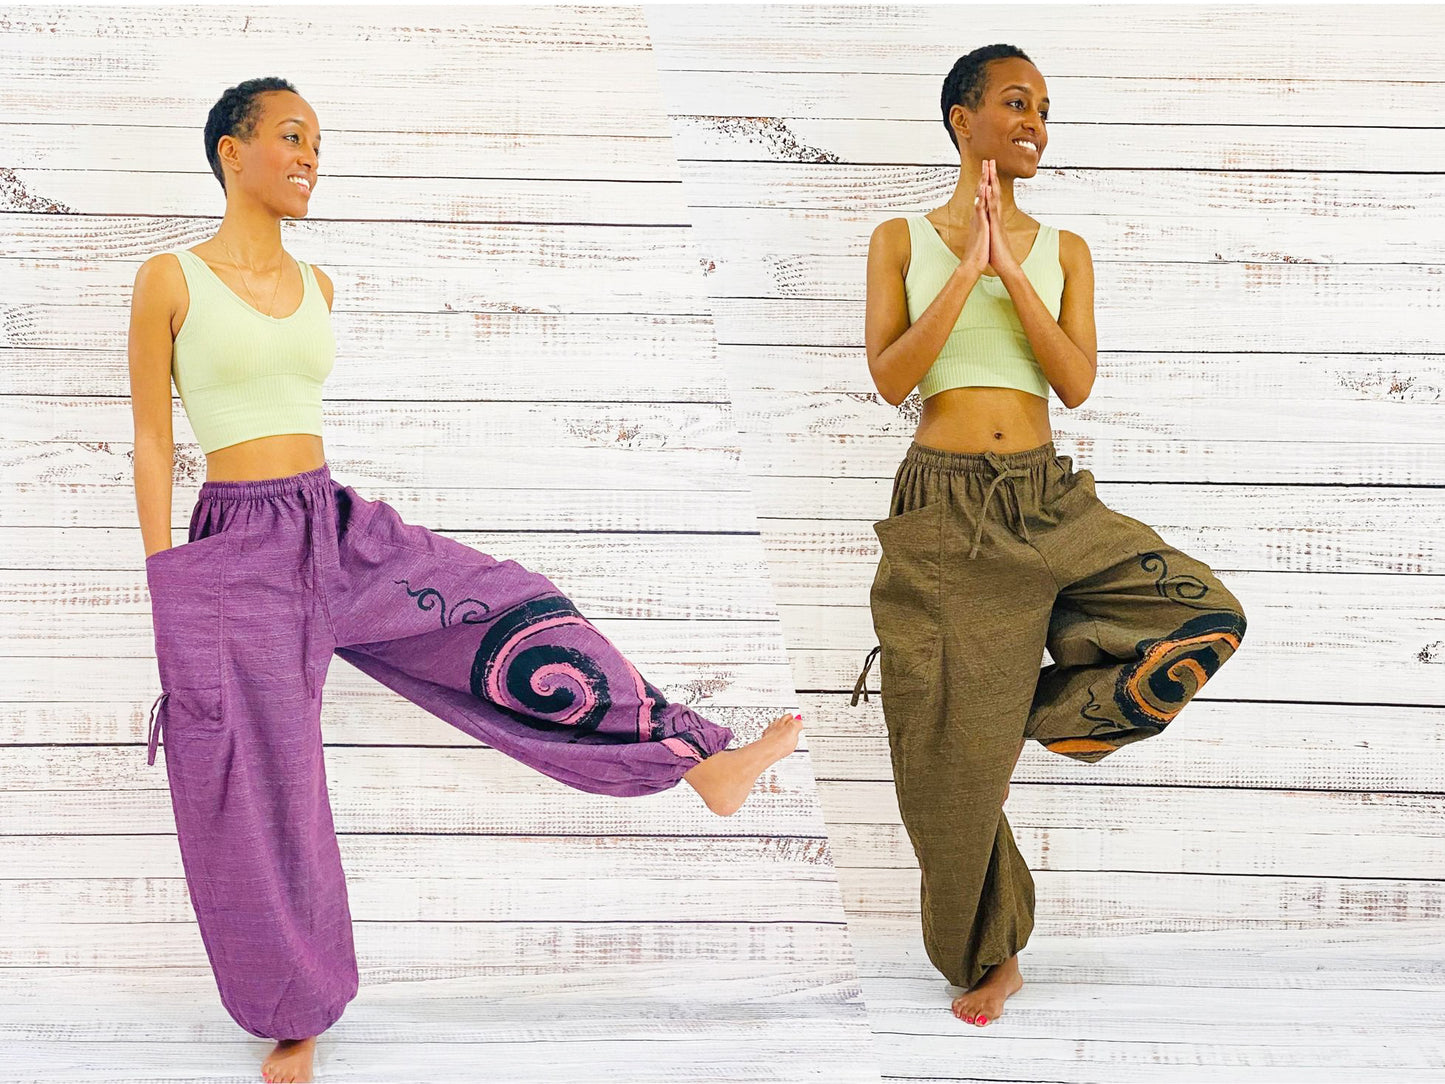 Women's High Quality Cotton Durable Yoga Pants Zen Harem Minimal Raw/Undyed